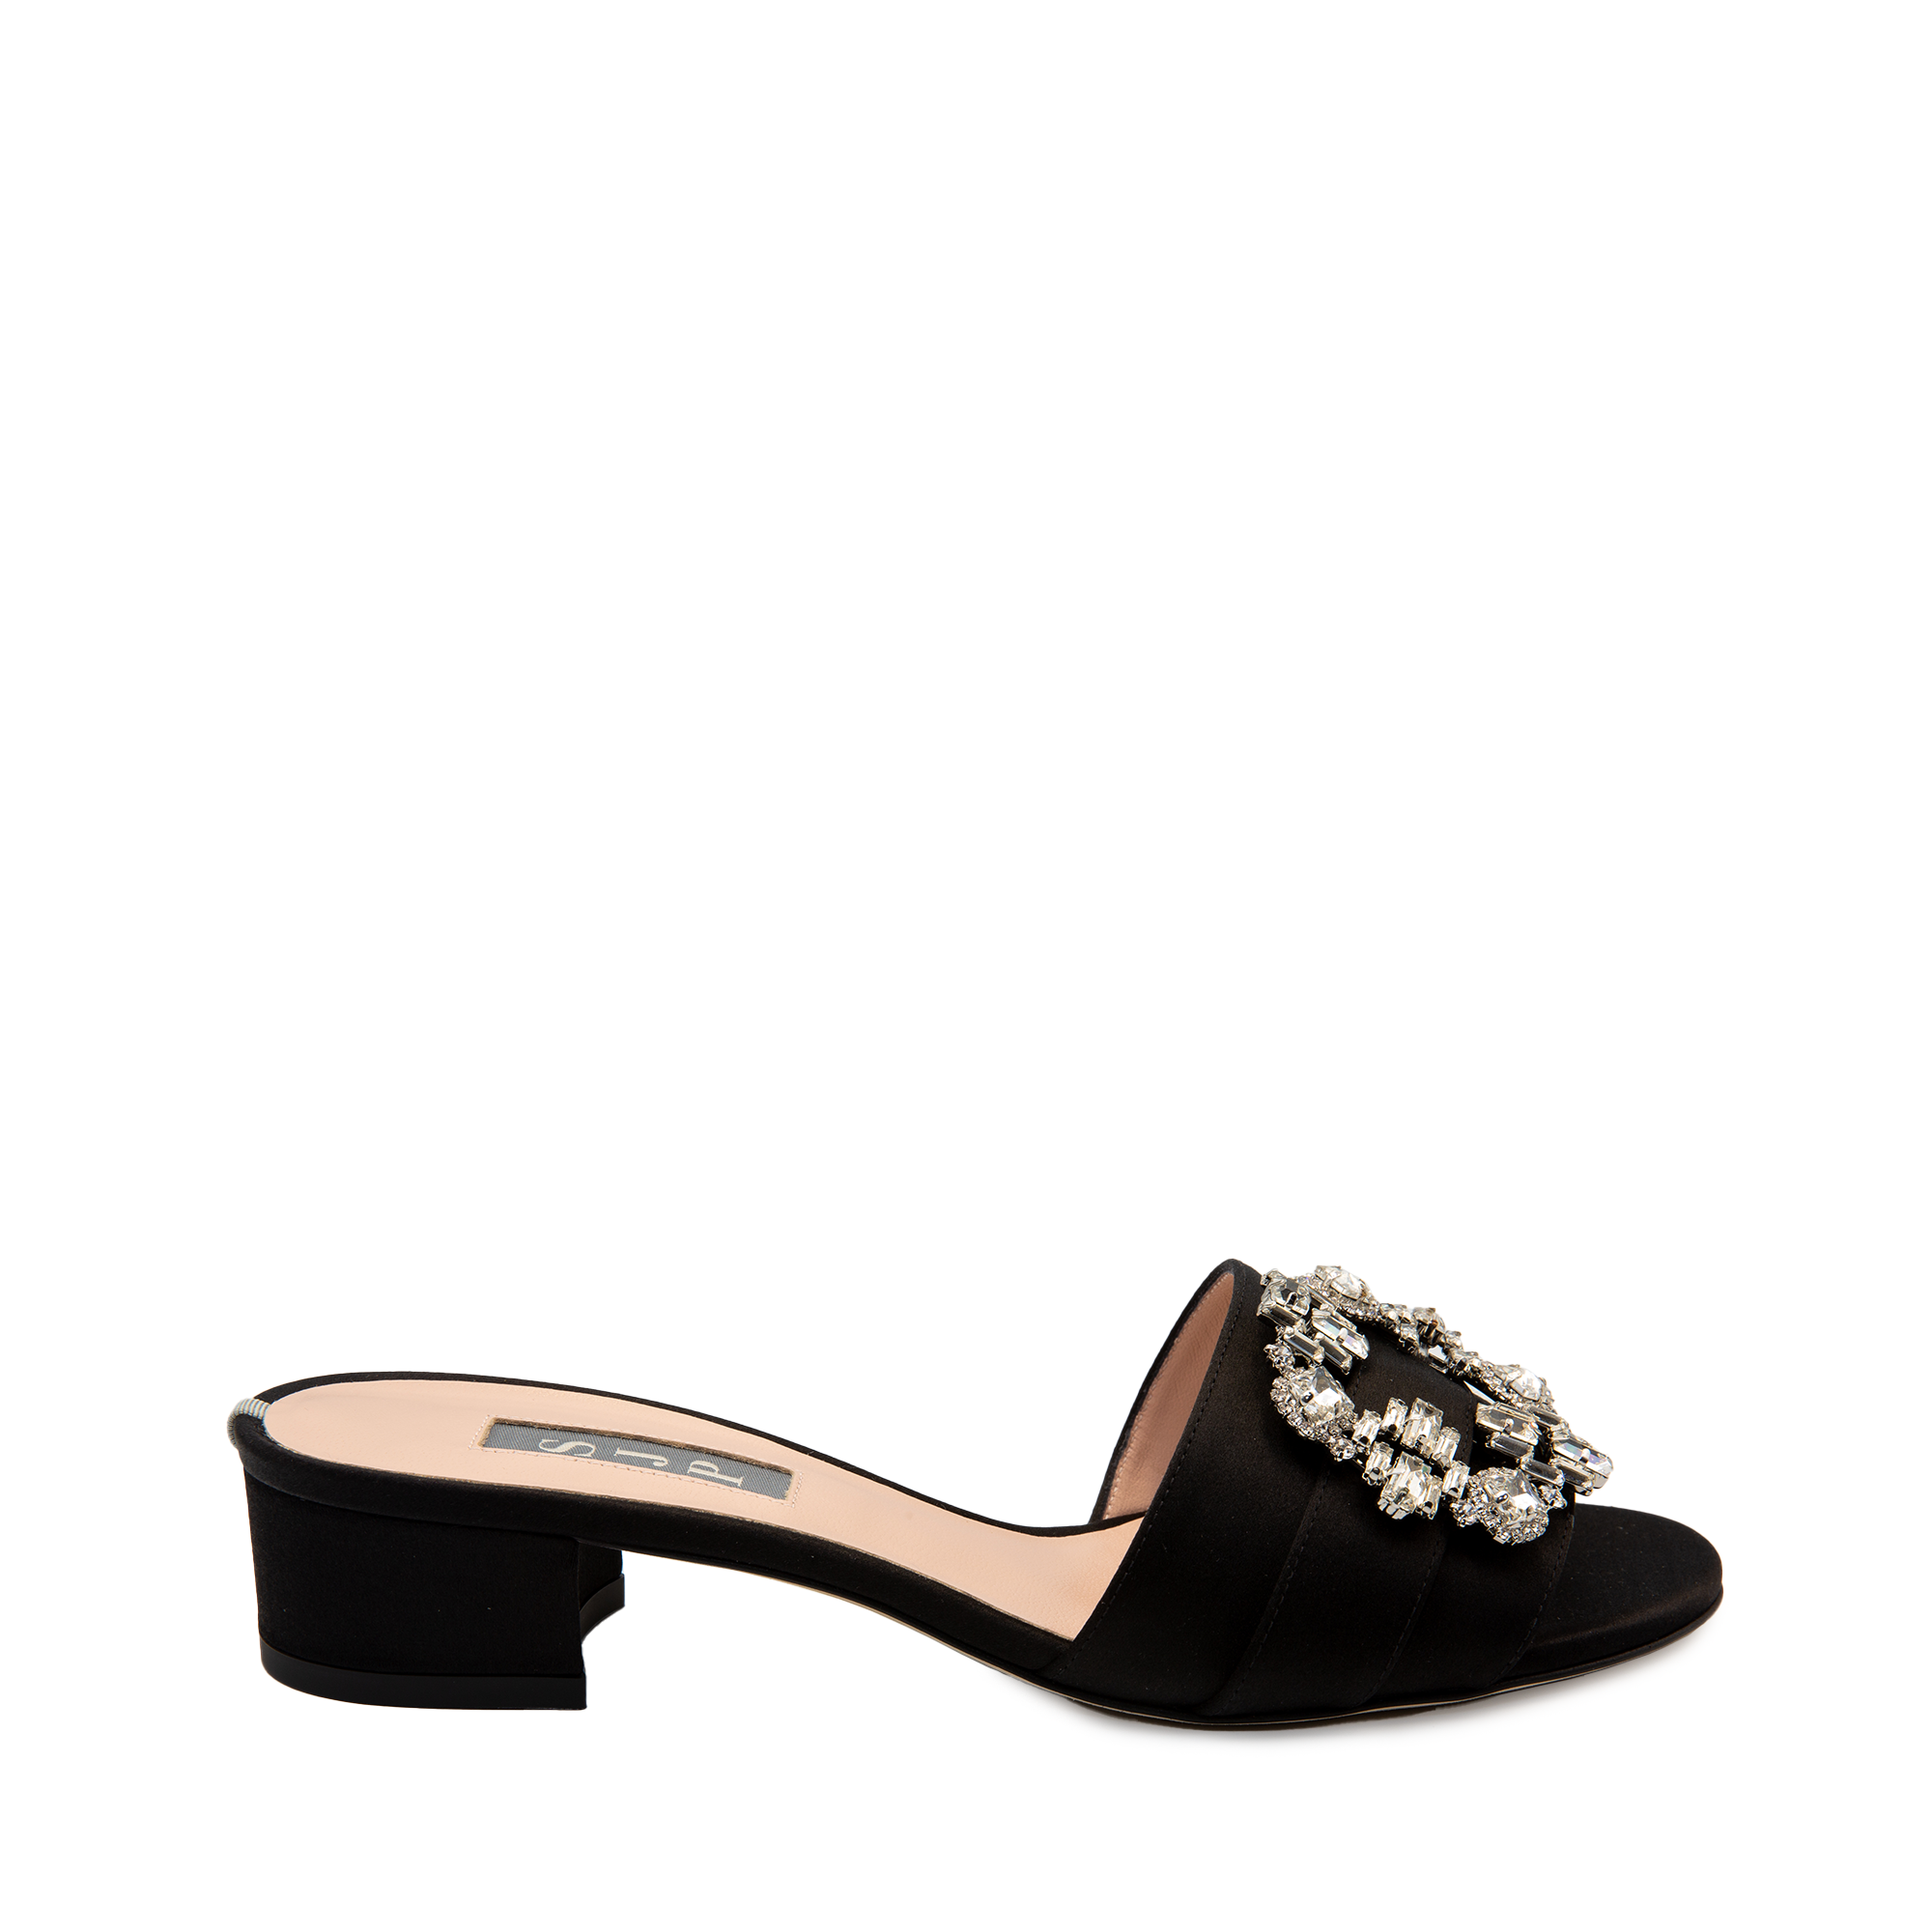 Shop SJP by Sarah Jessica Parker Black color Sandals for Women Online ...